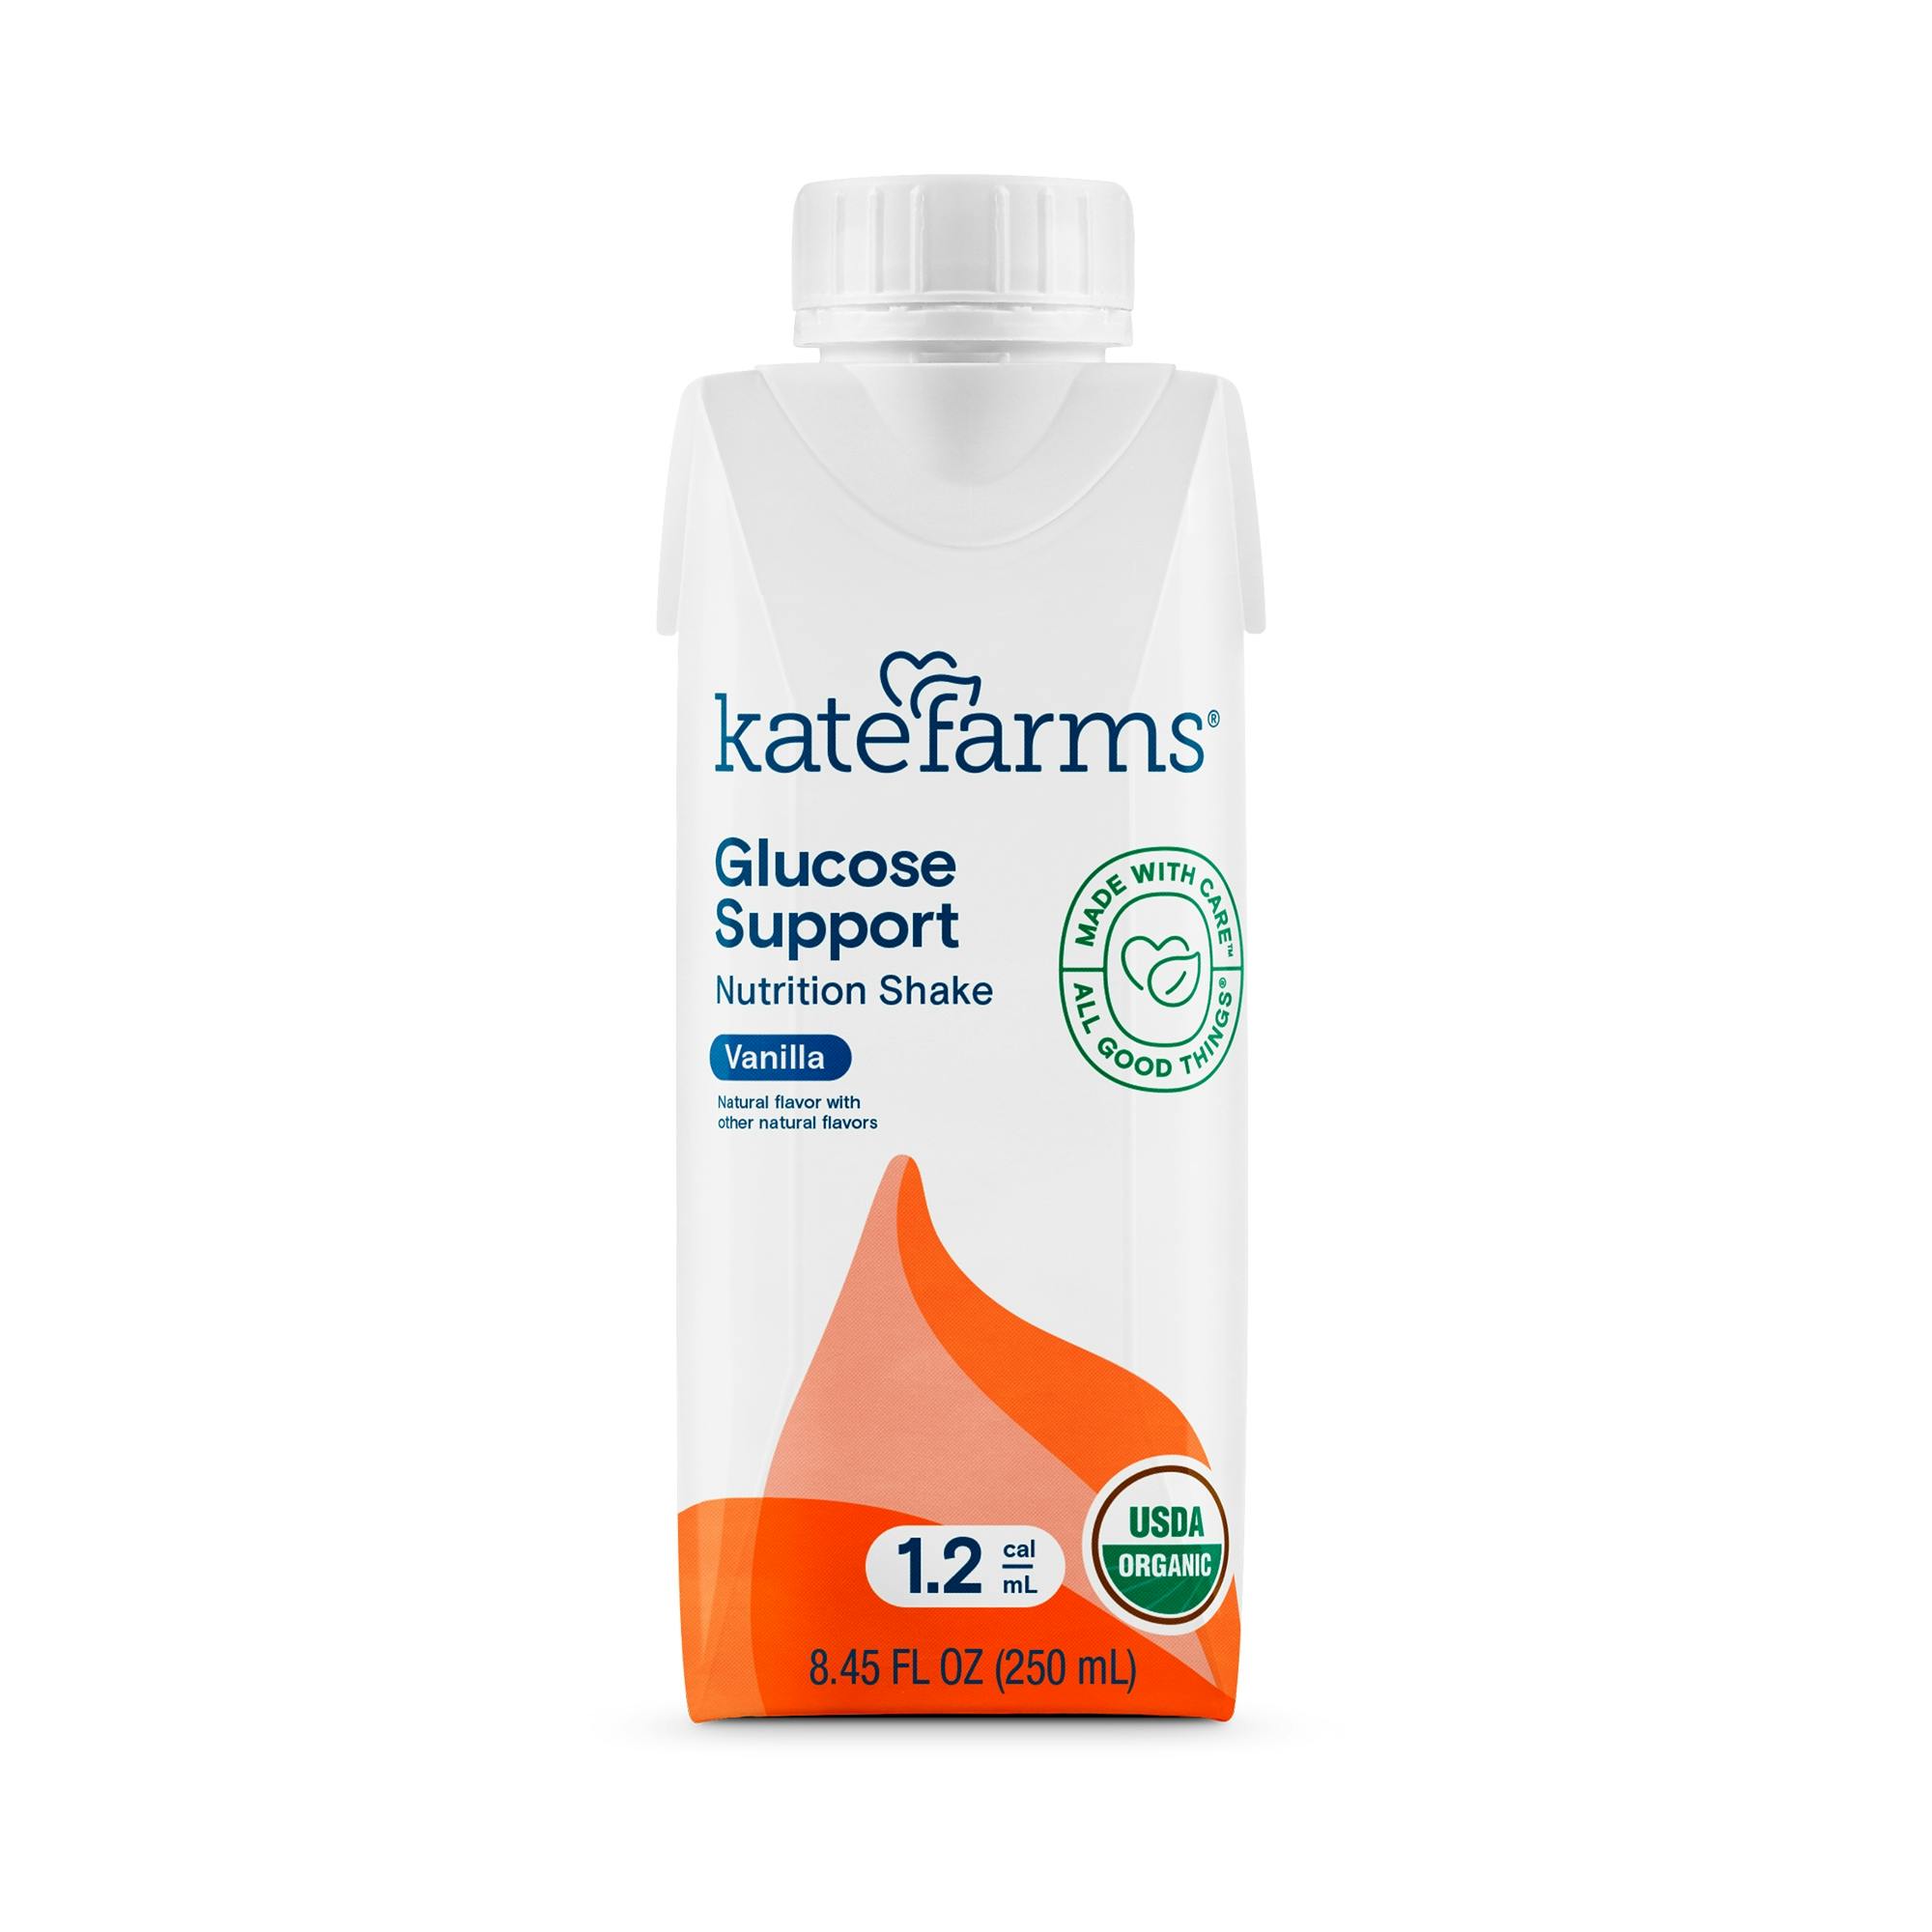 Kate Farms 1.2 Glucose Support Nutritional Shake, Vanilla, 8.45 oz.